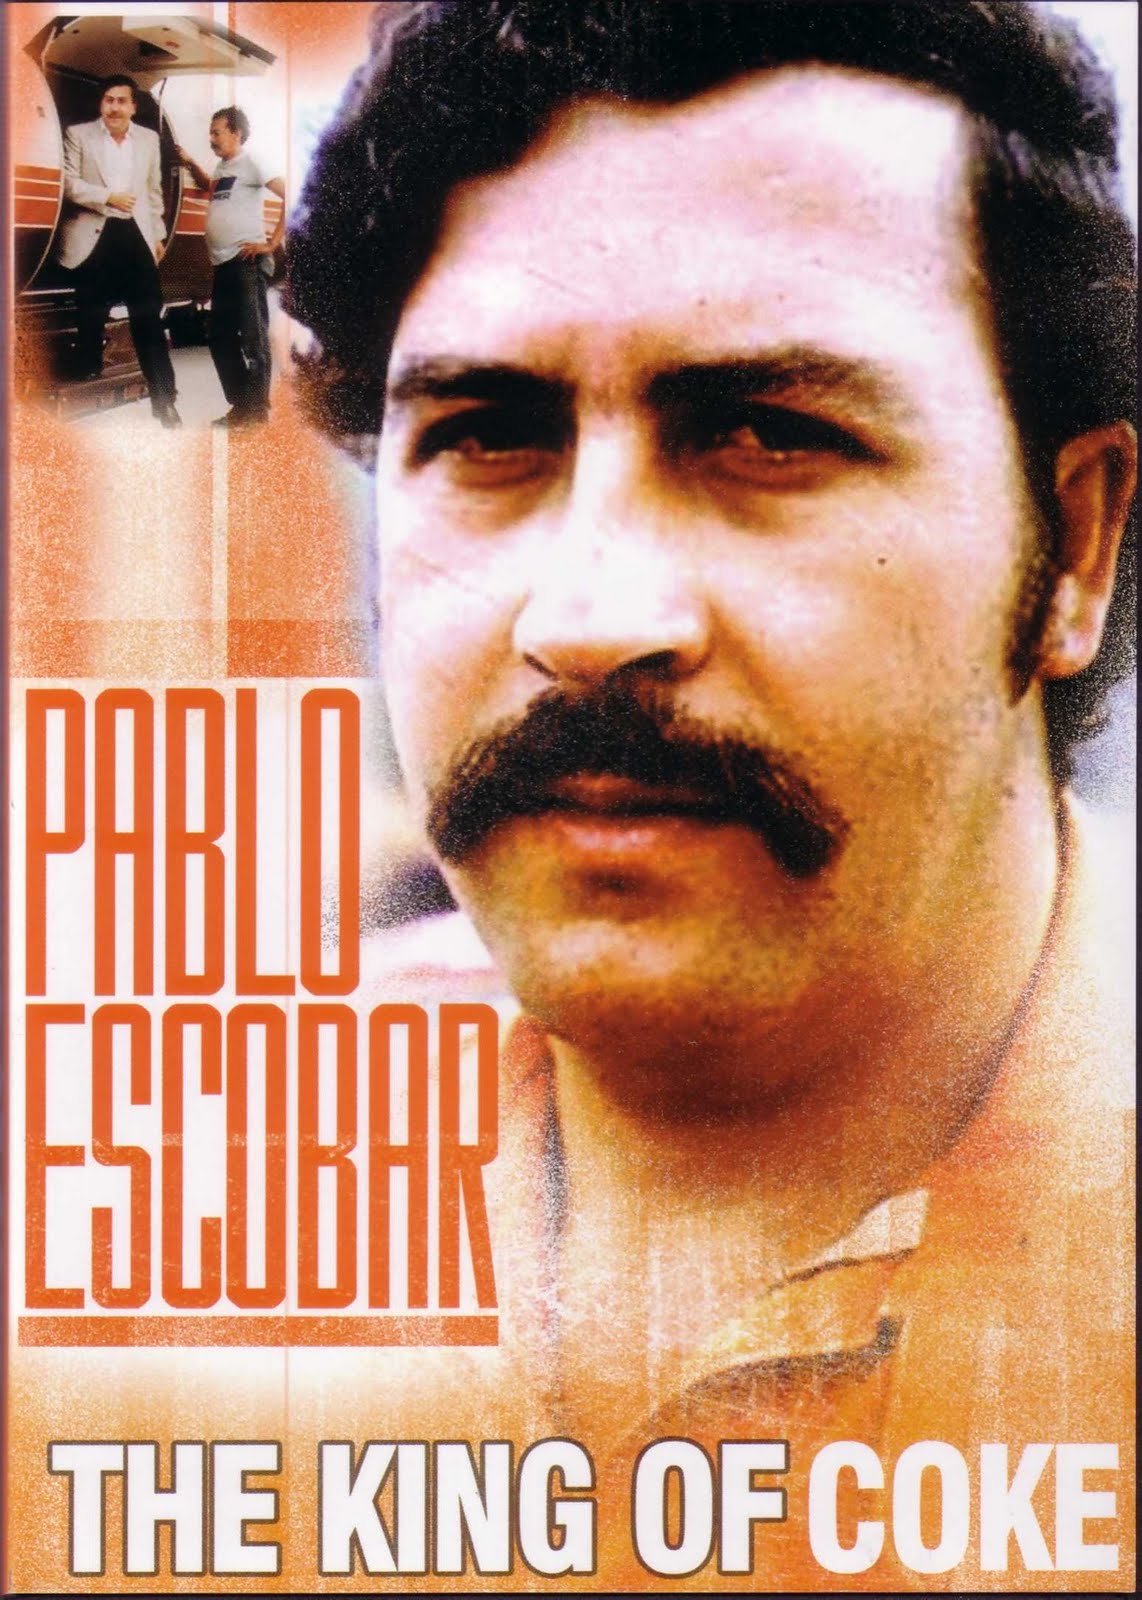 Pablo Escobar - King Of Coke - 2007 Full Movie - YouTube